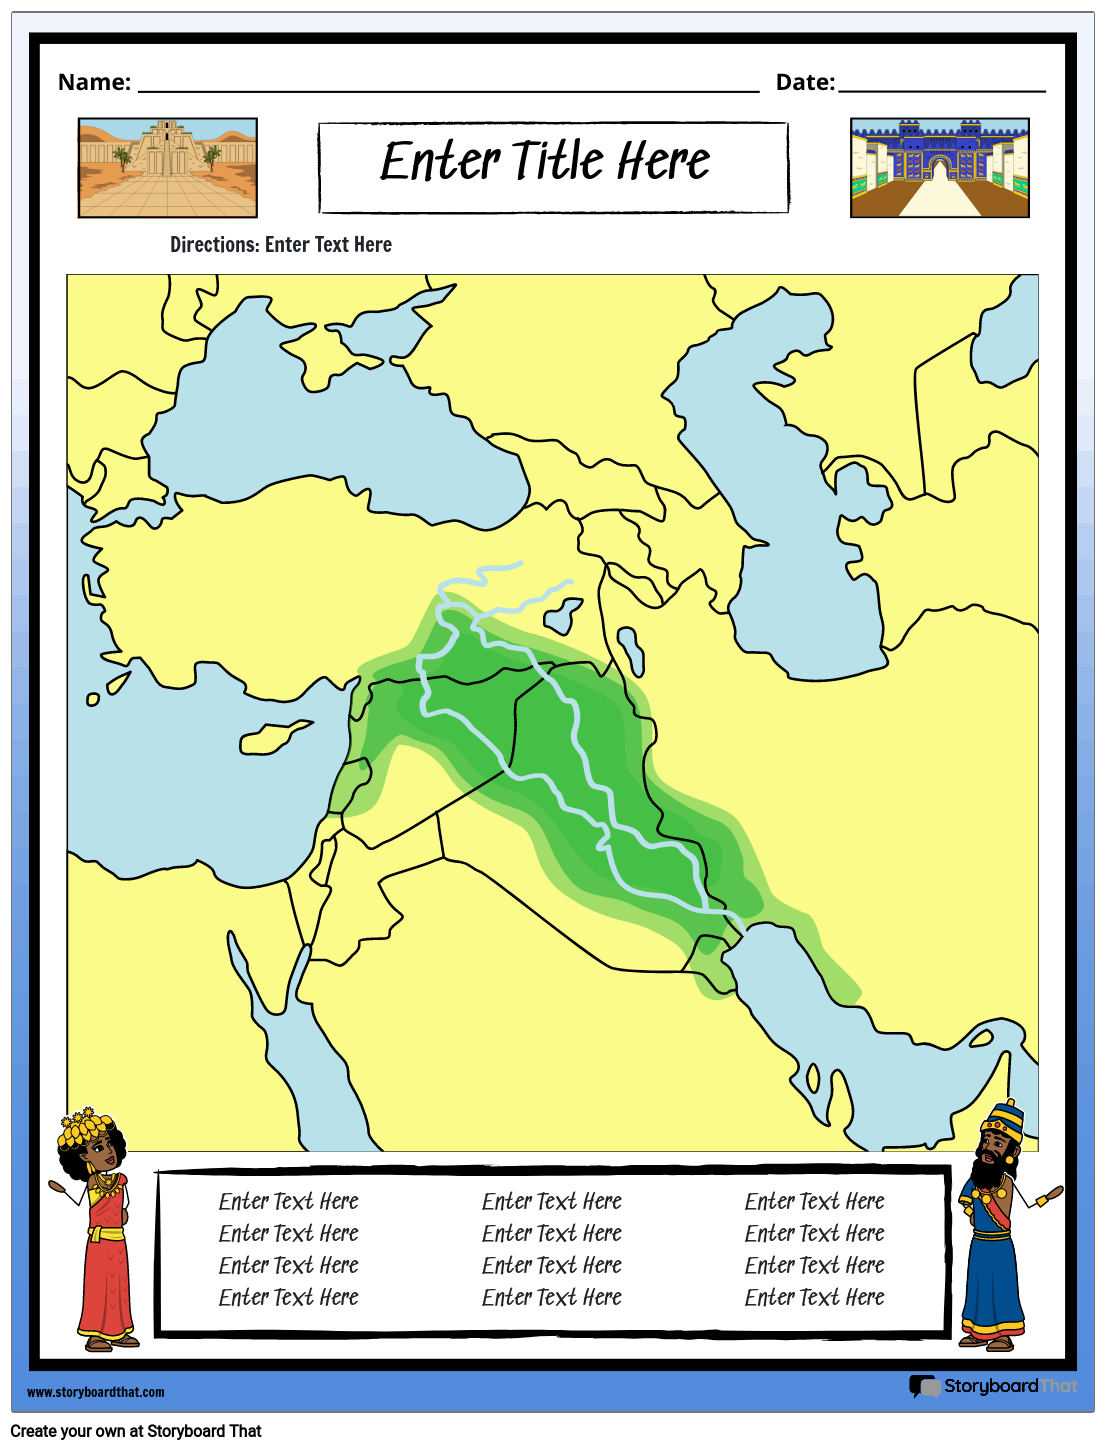 Mapa da Mesopotâmia